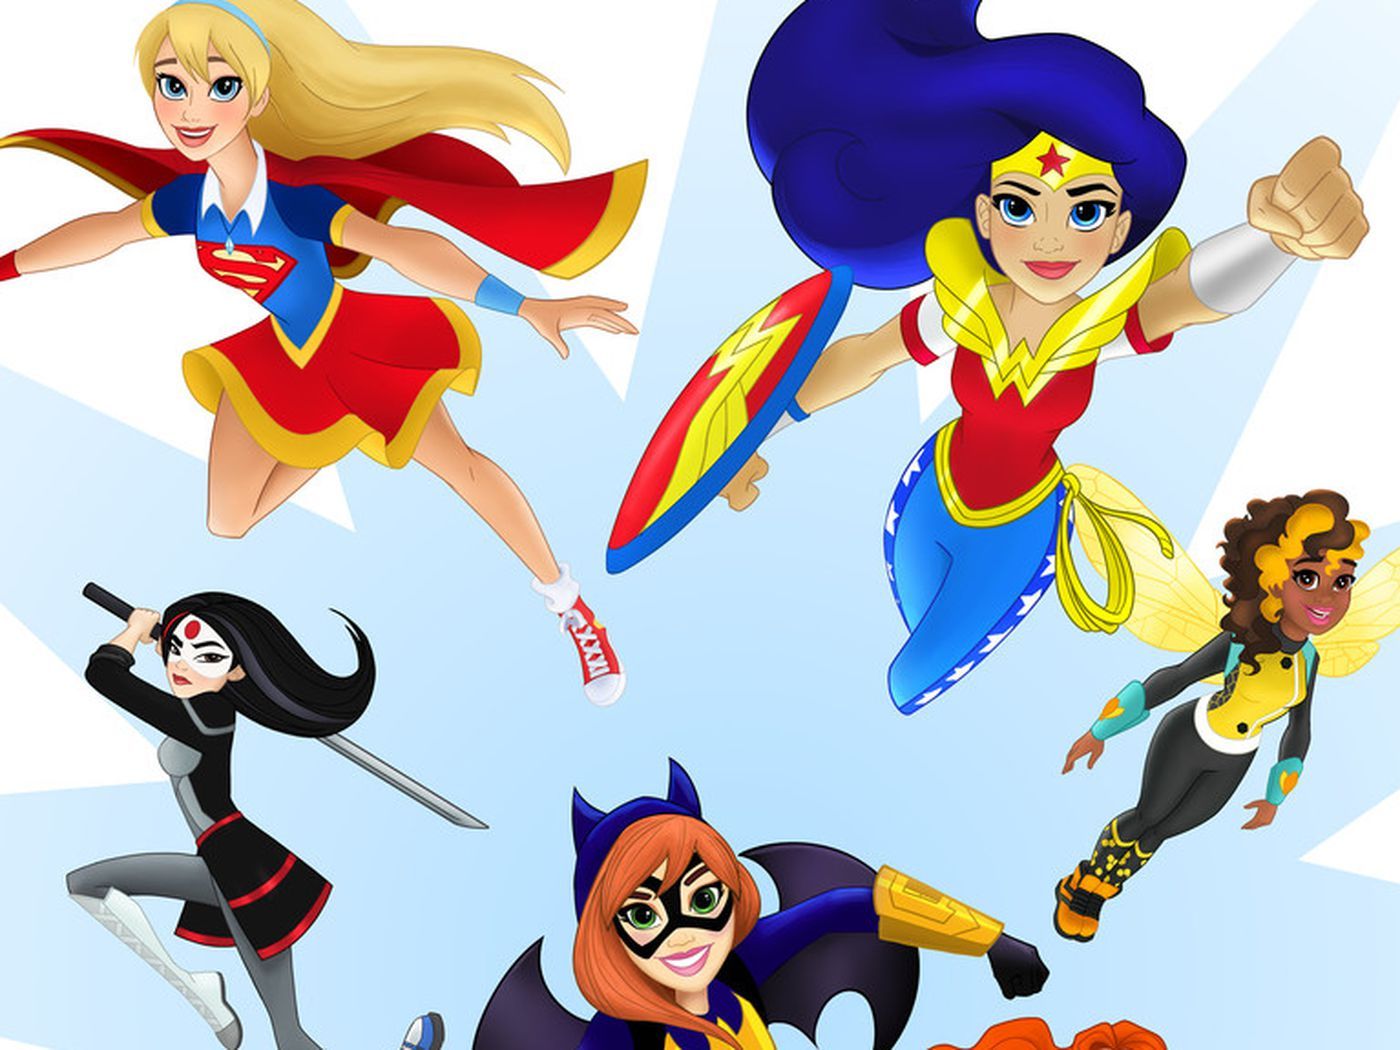 DC Announces Long Overdue Girl Focused Superhero Initiative, But